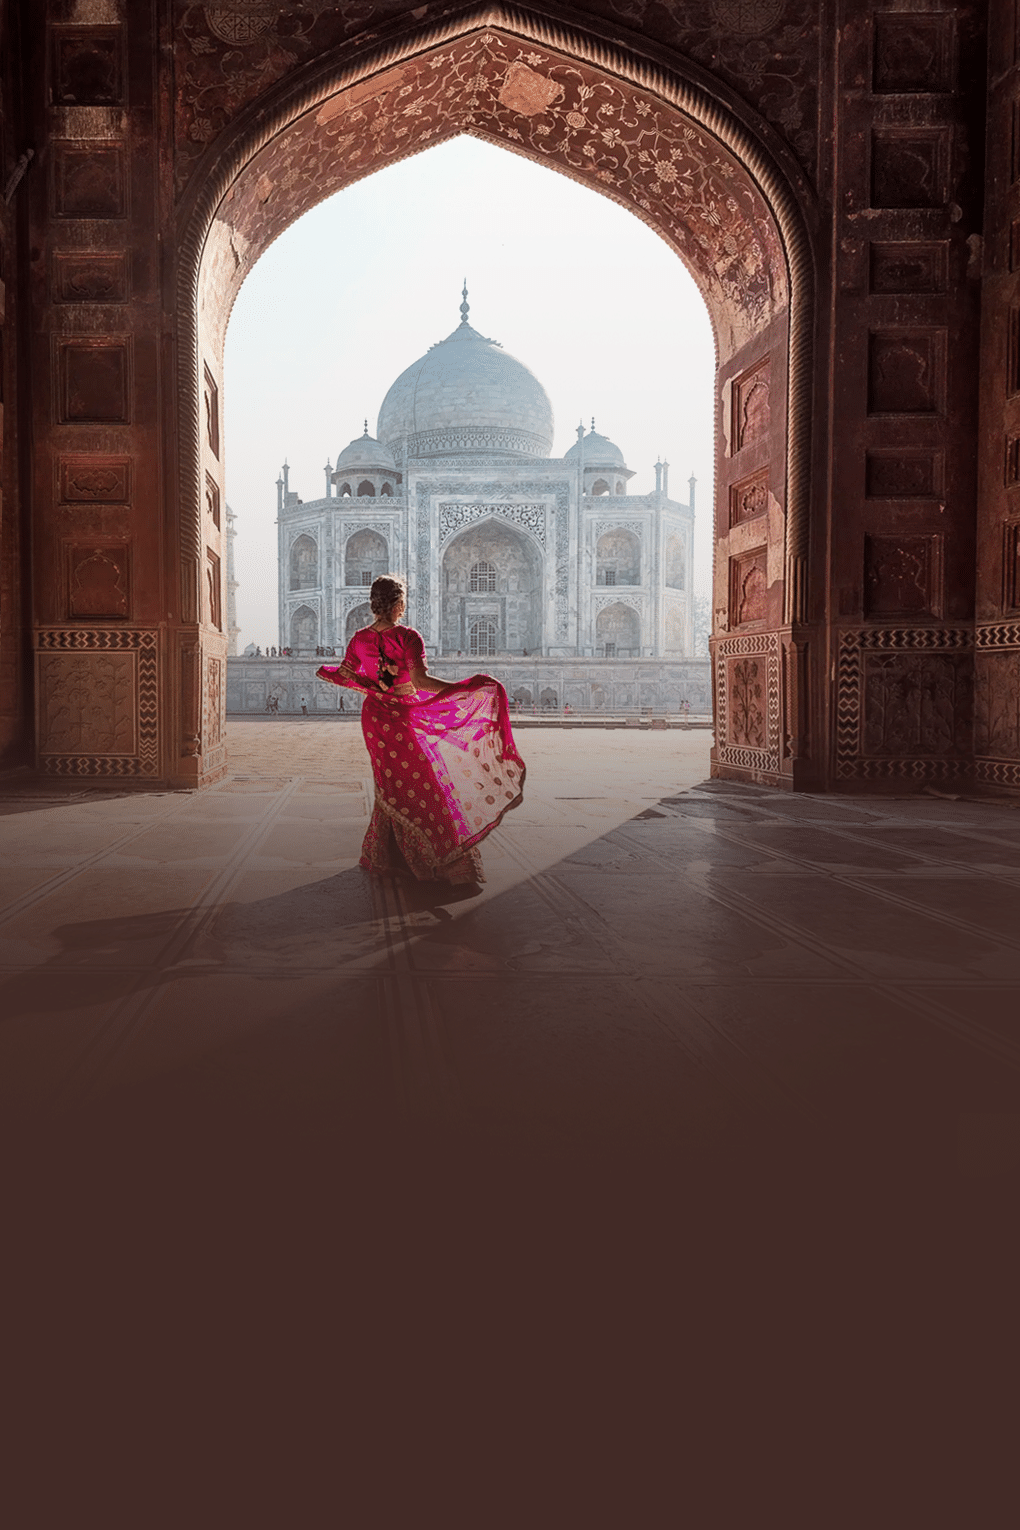 Getaway to Golden Triangle India | FREE Taj Mahal Visit